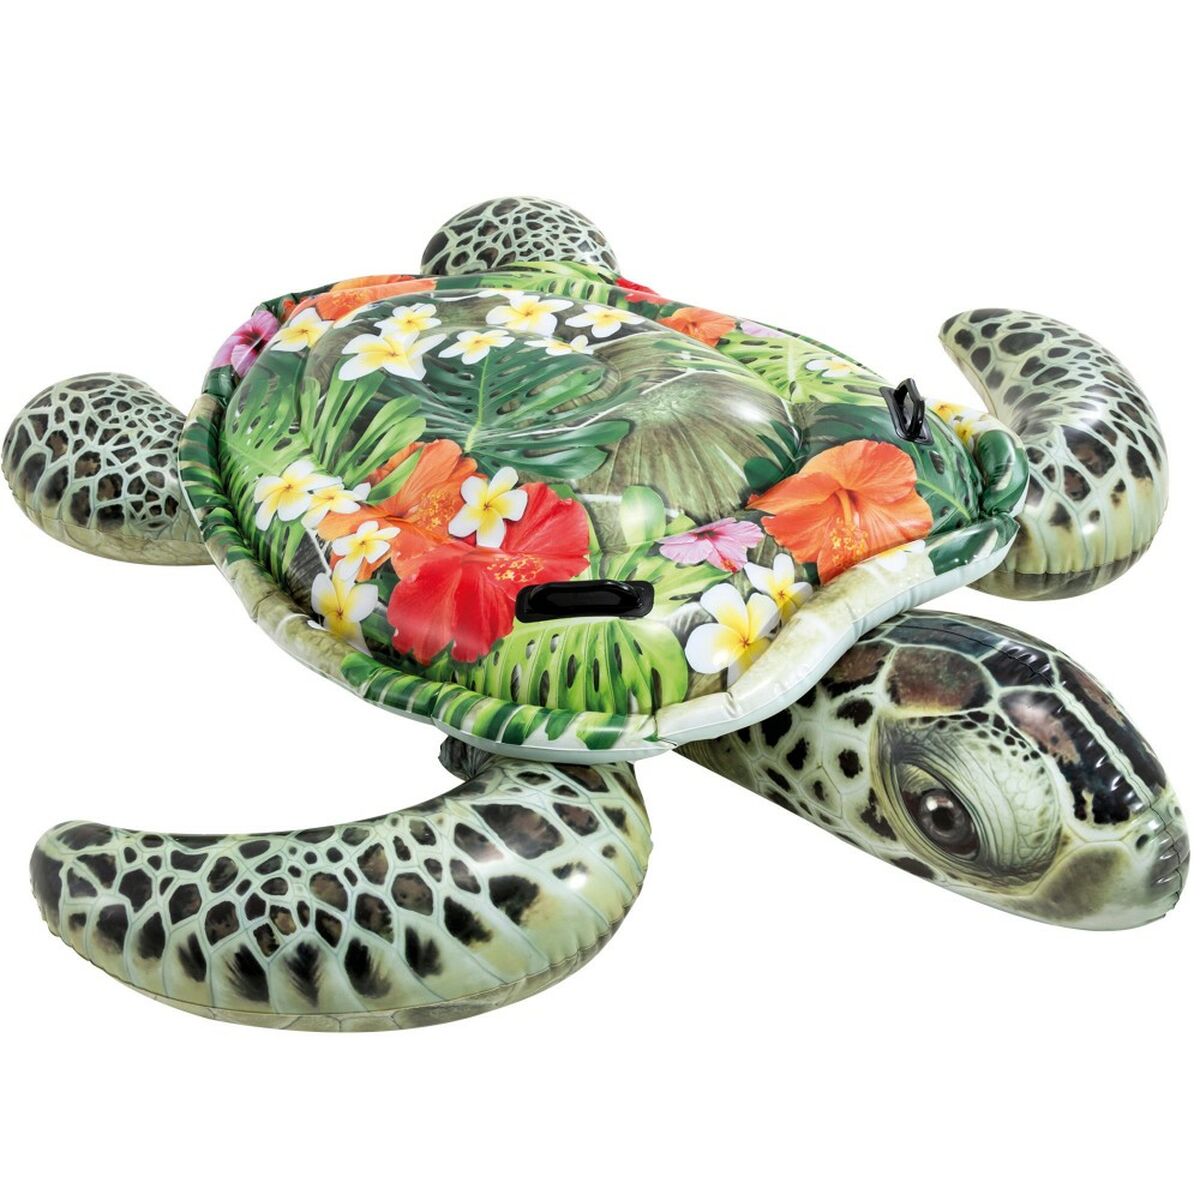 Inflatable pool figure Intex Ride On         Tortoise 170 x 38 x 191 cm  